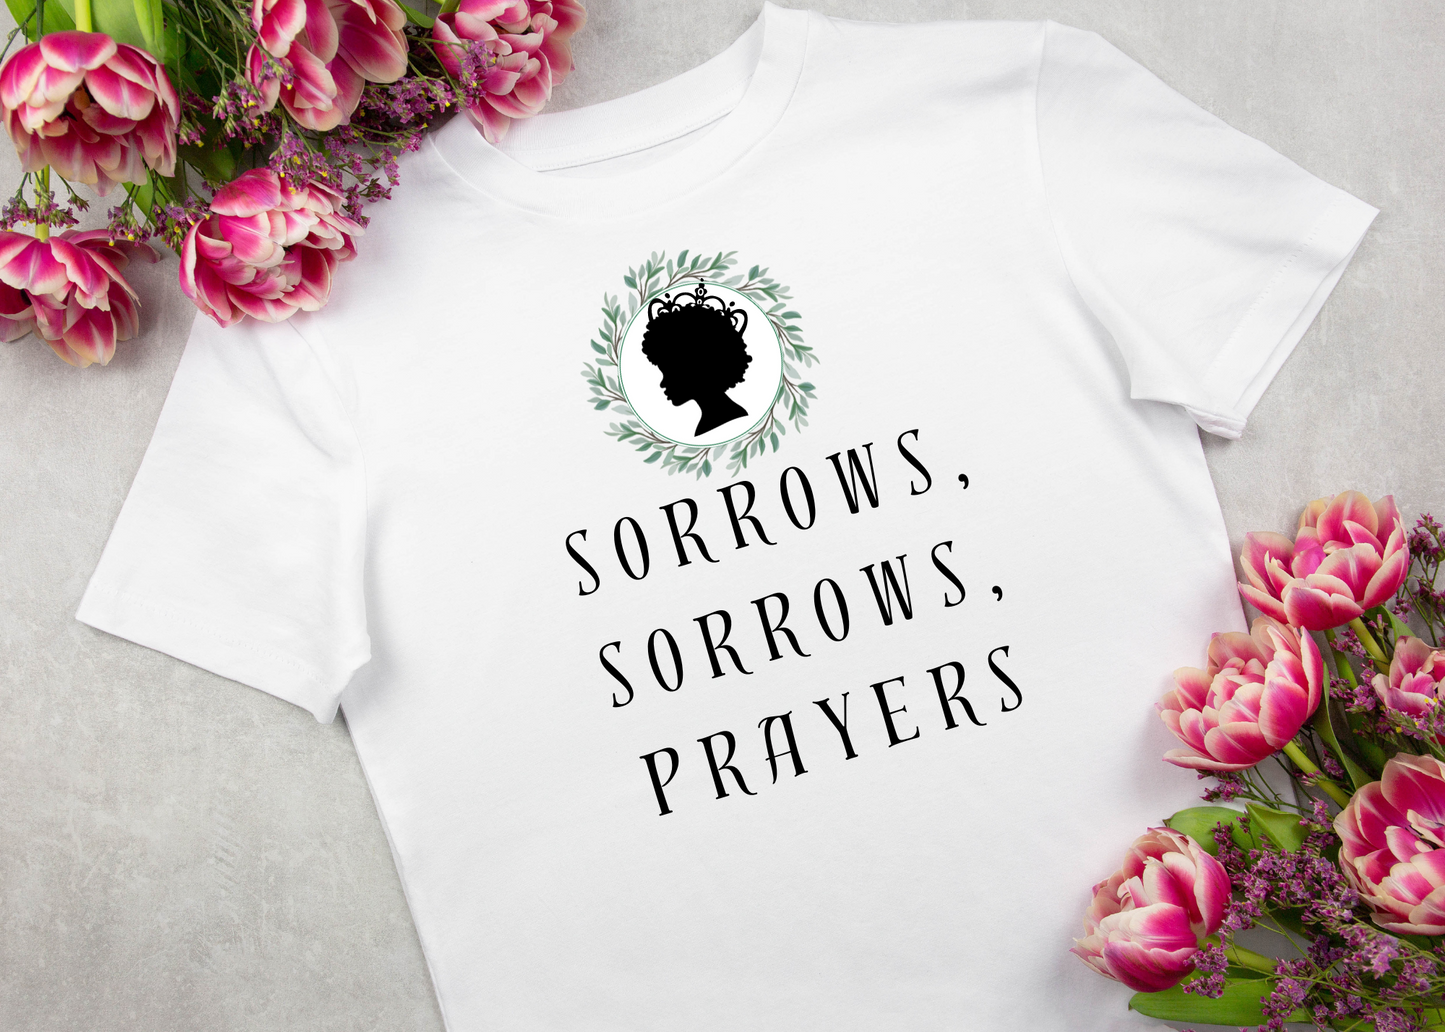 Sorrows Prayers T-Shirt